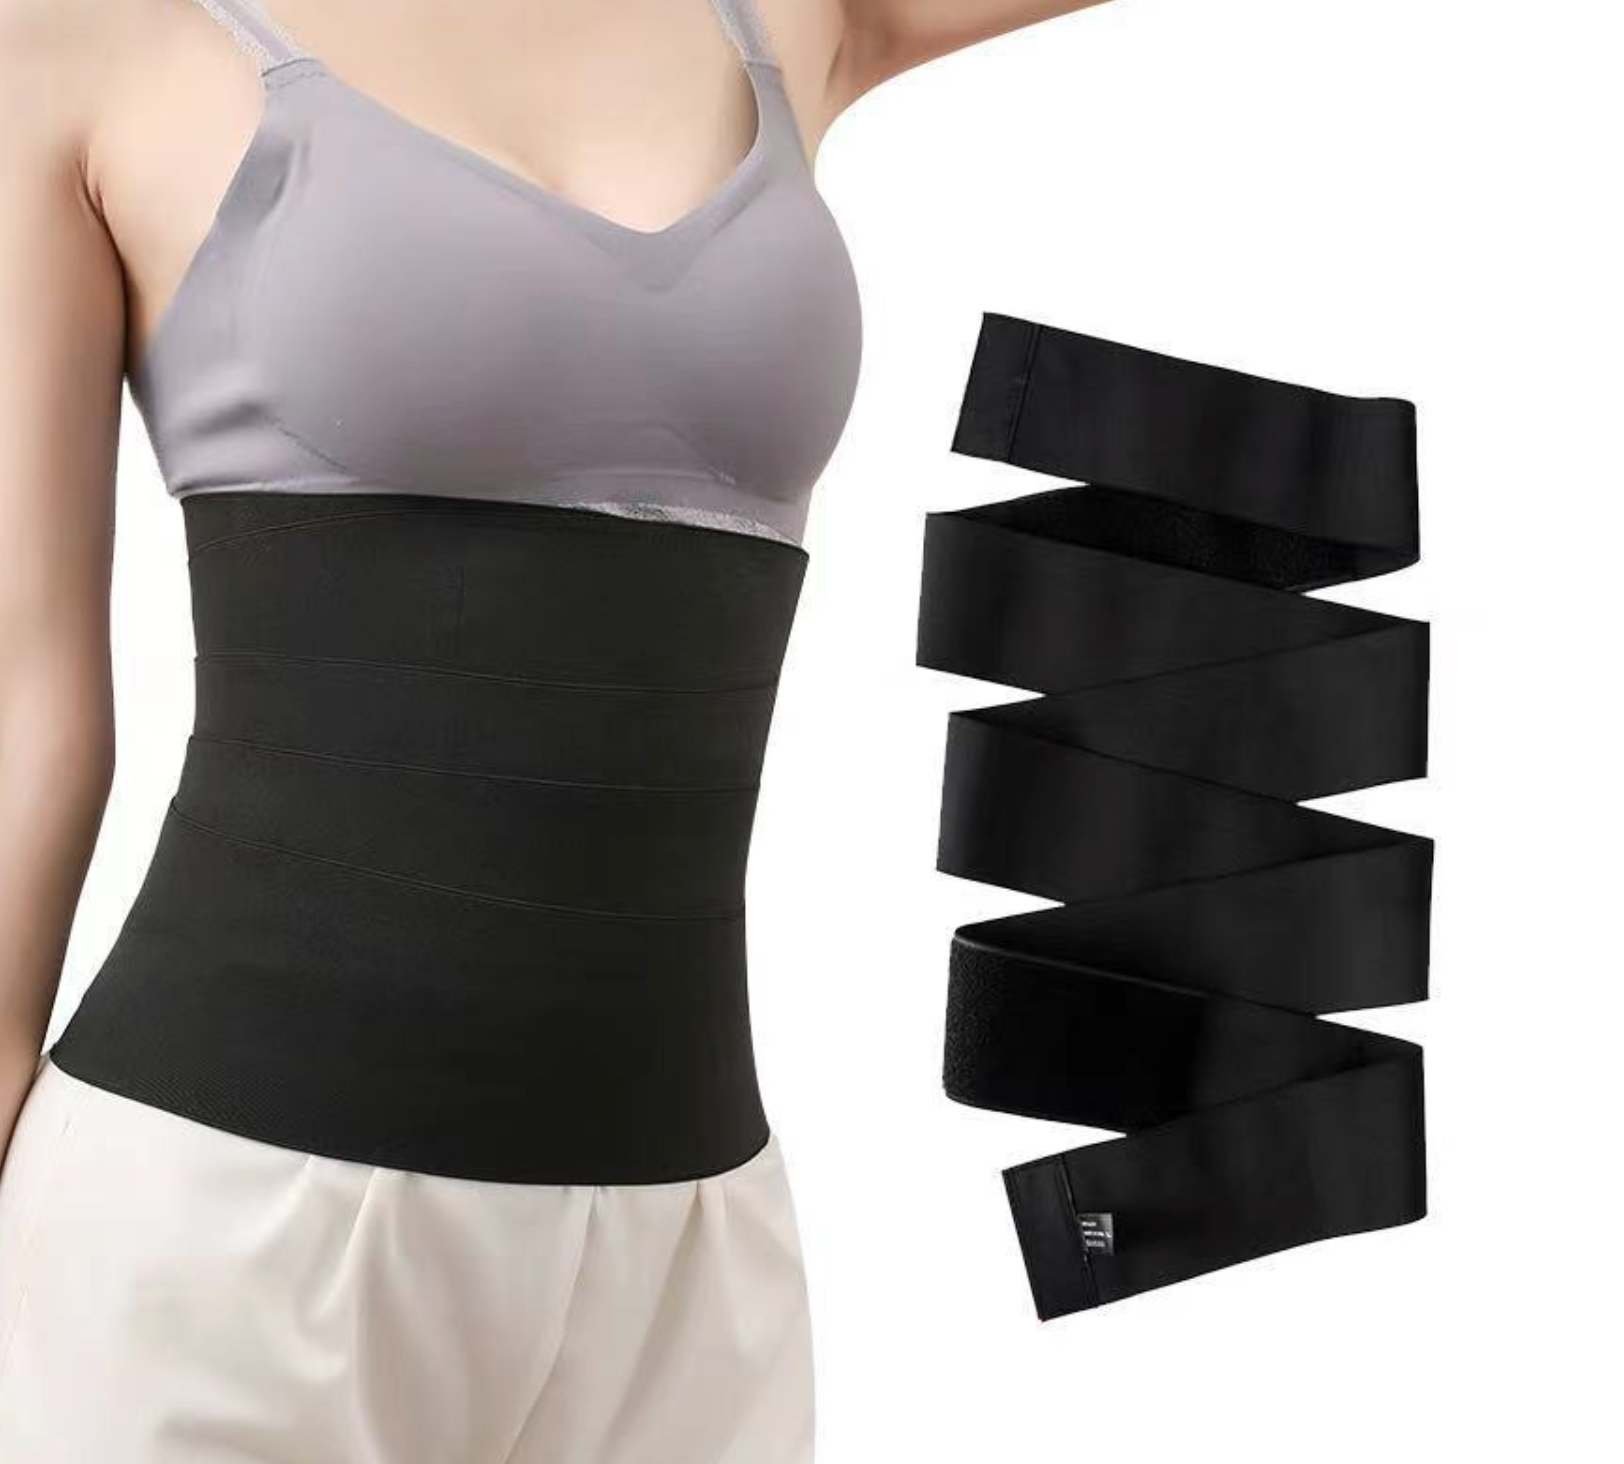 6m Elastic Waist Tummy Wrap Slimming Body Training Belt Corset - Black, Shop Today. Get it Tomorrow!